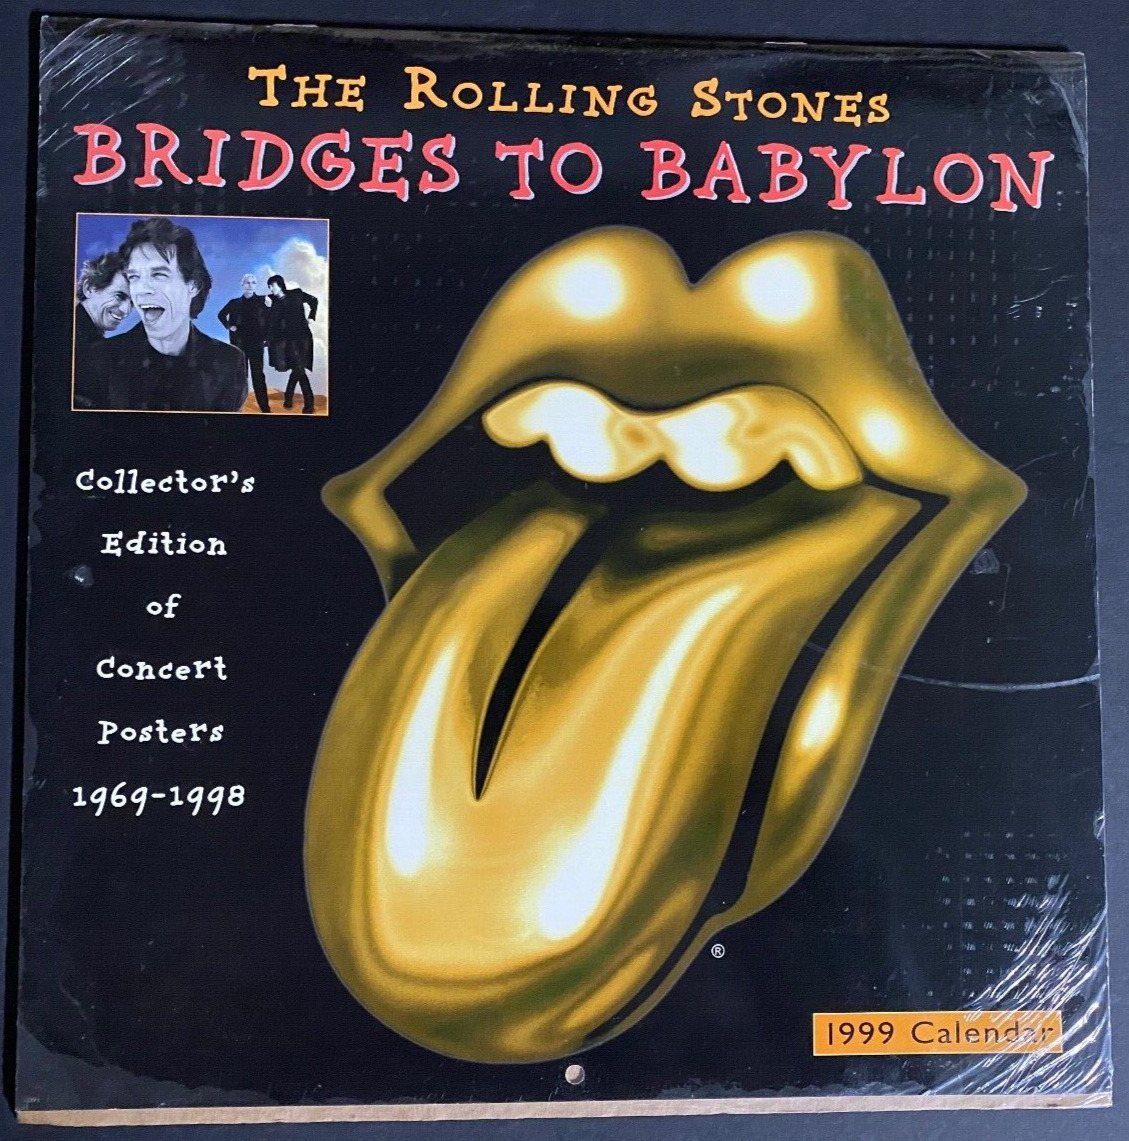 THE ROLLING STONES: Bridges to Babylon 1999 Wall Calendar